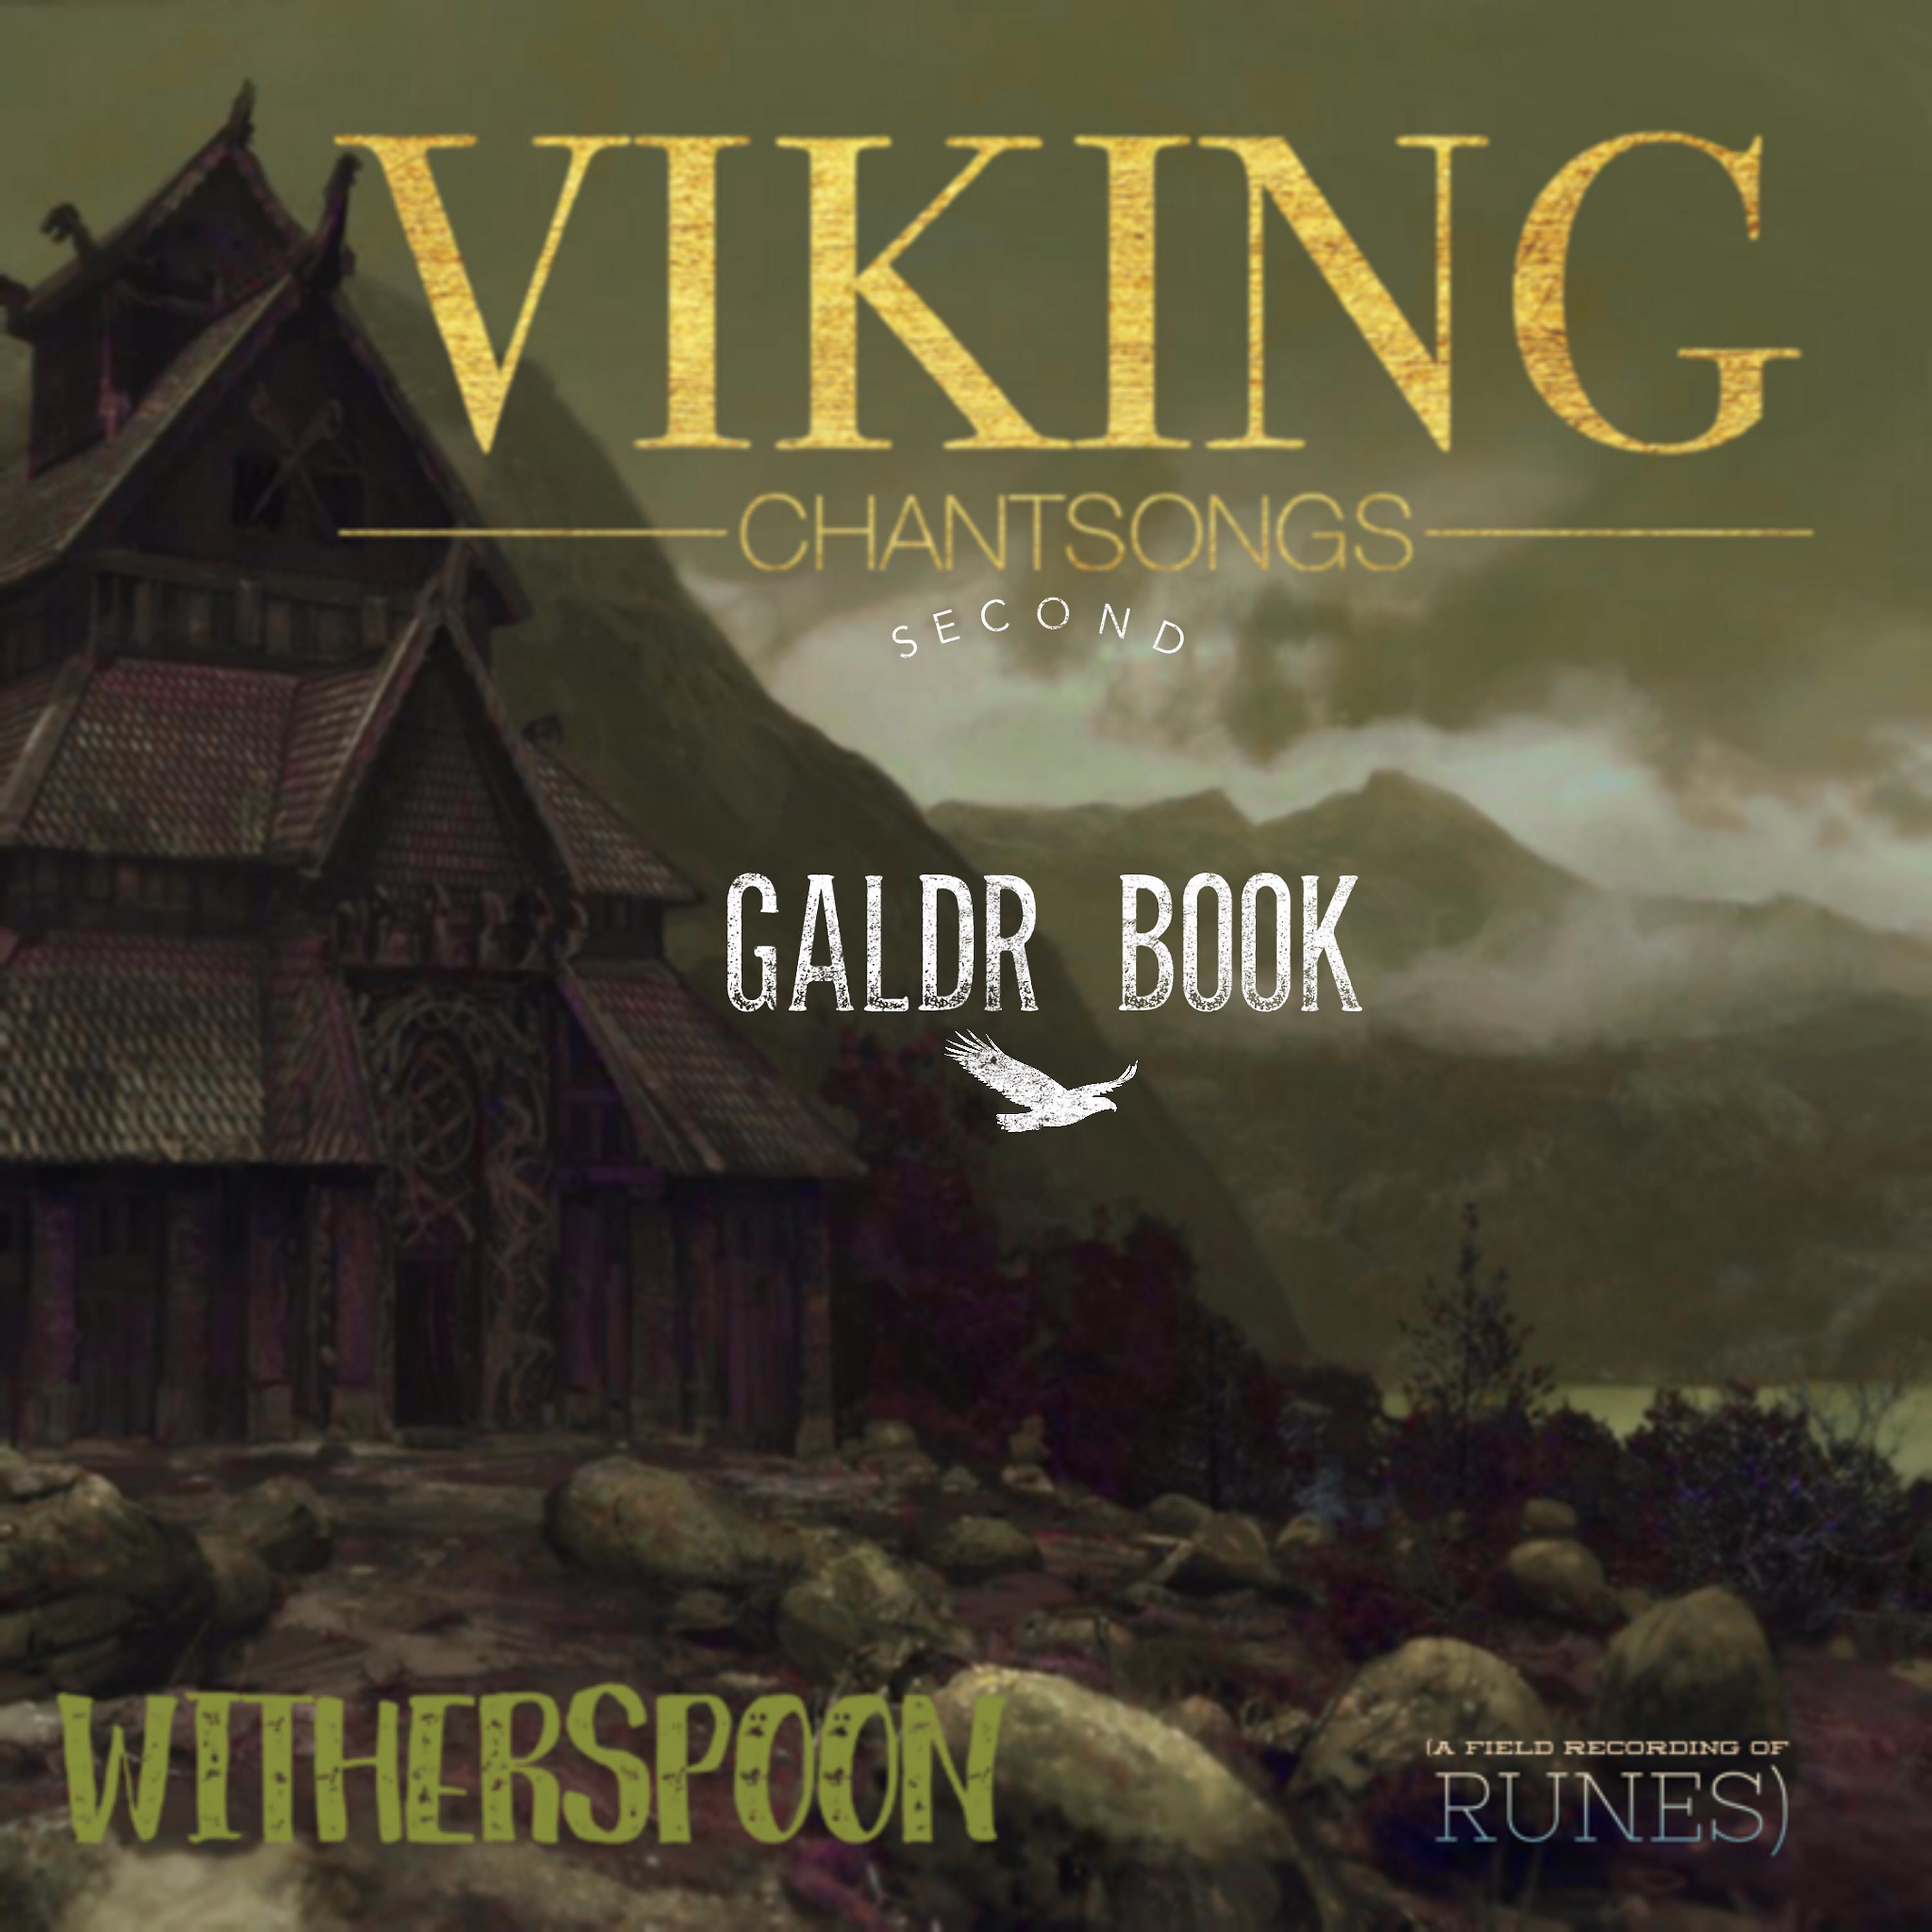 Постер альбома Viking Chantsongs Second Galdr Book (a Field Recording of Runes)